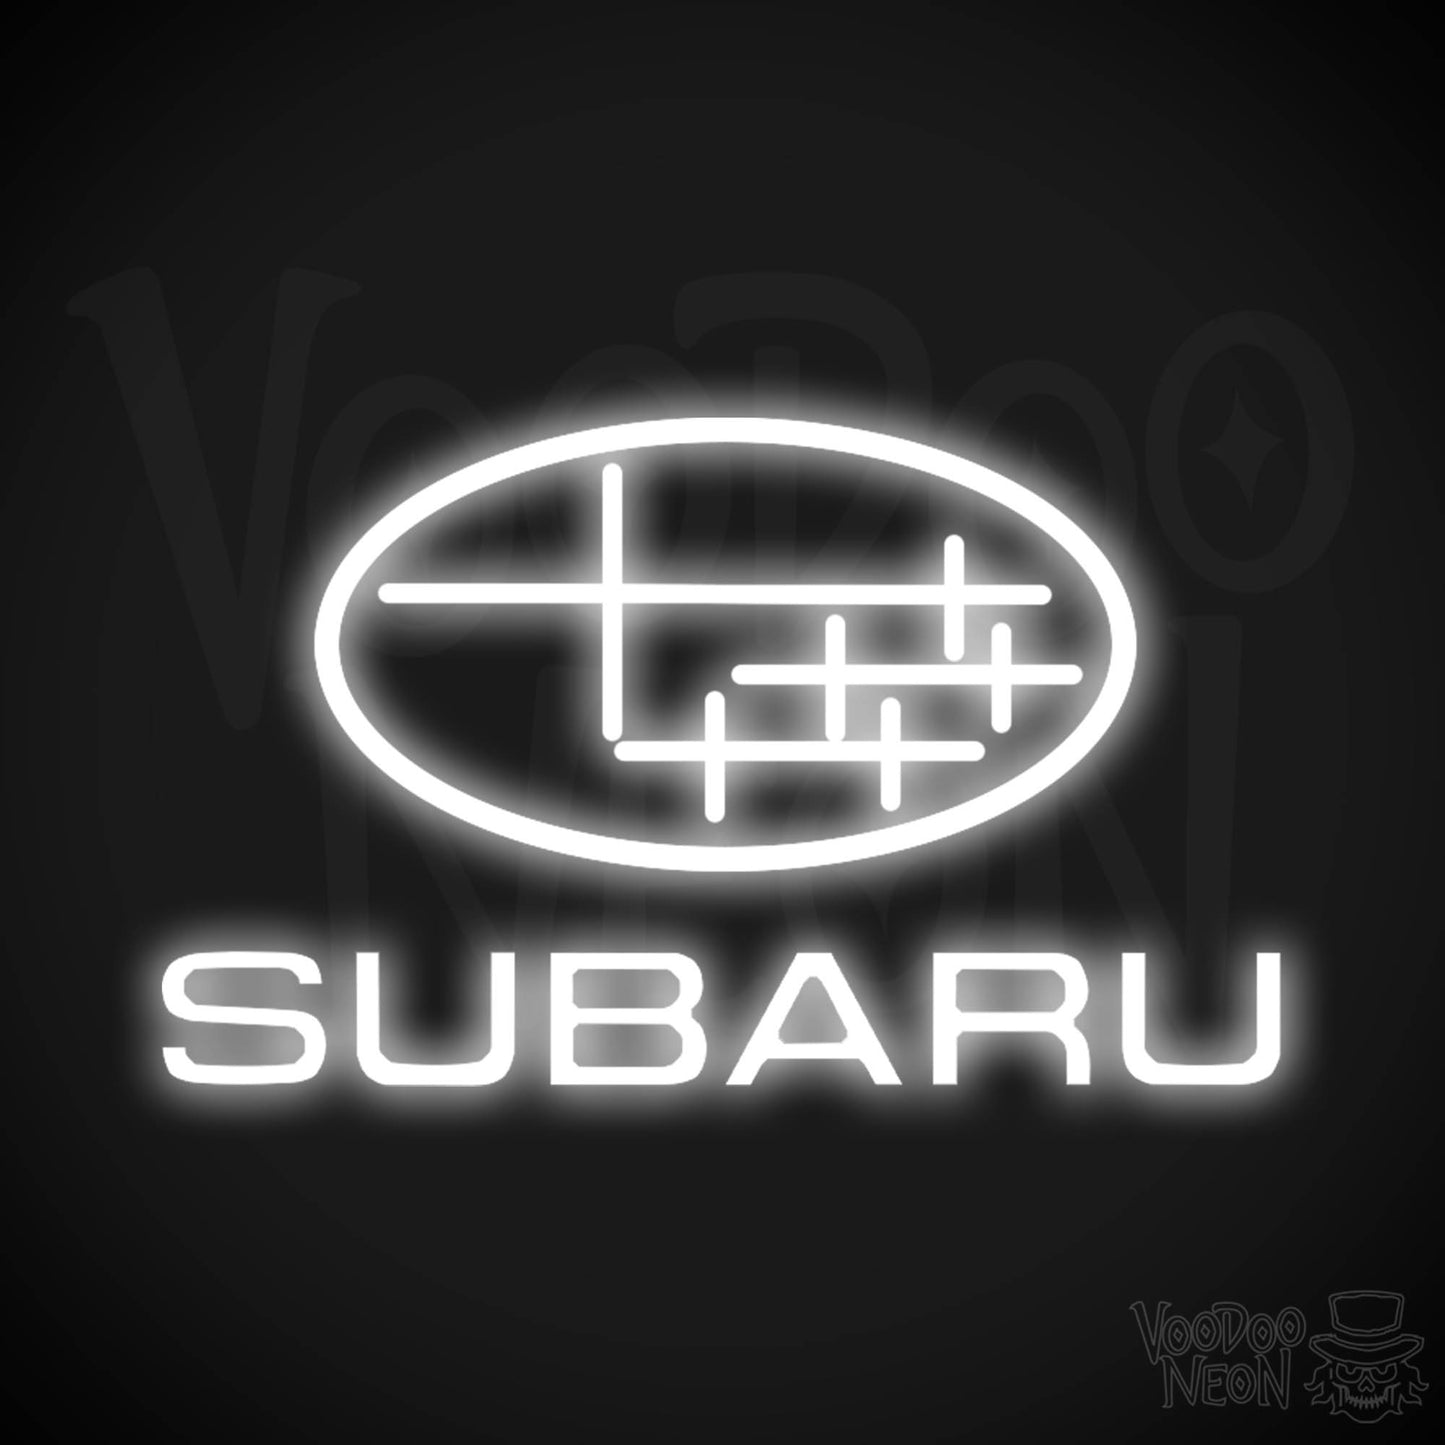 Subaru Neon Sign - Subaru Sign - Subaru Decor - Wall Art - Color White